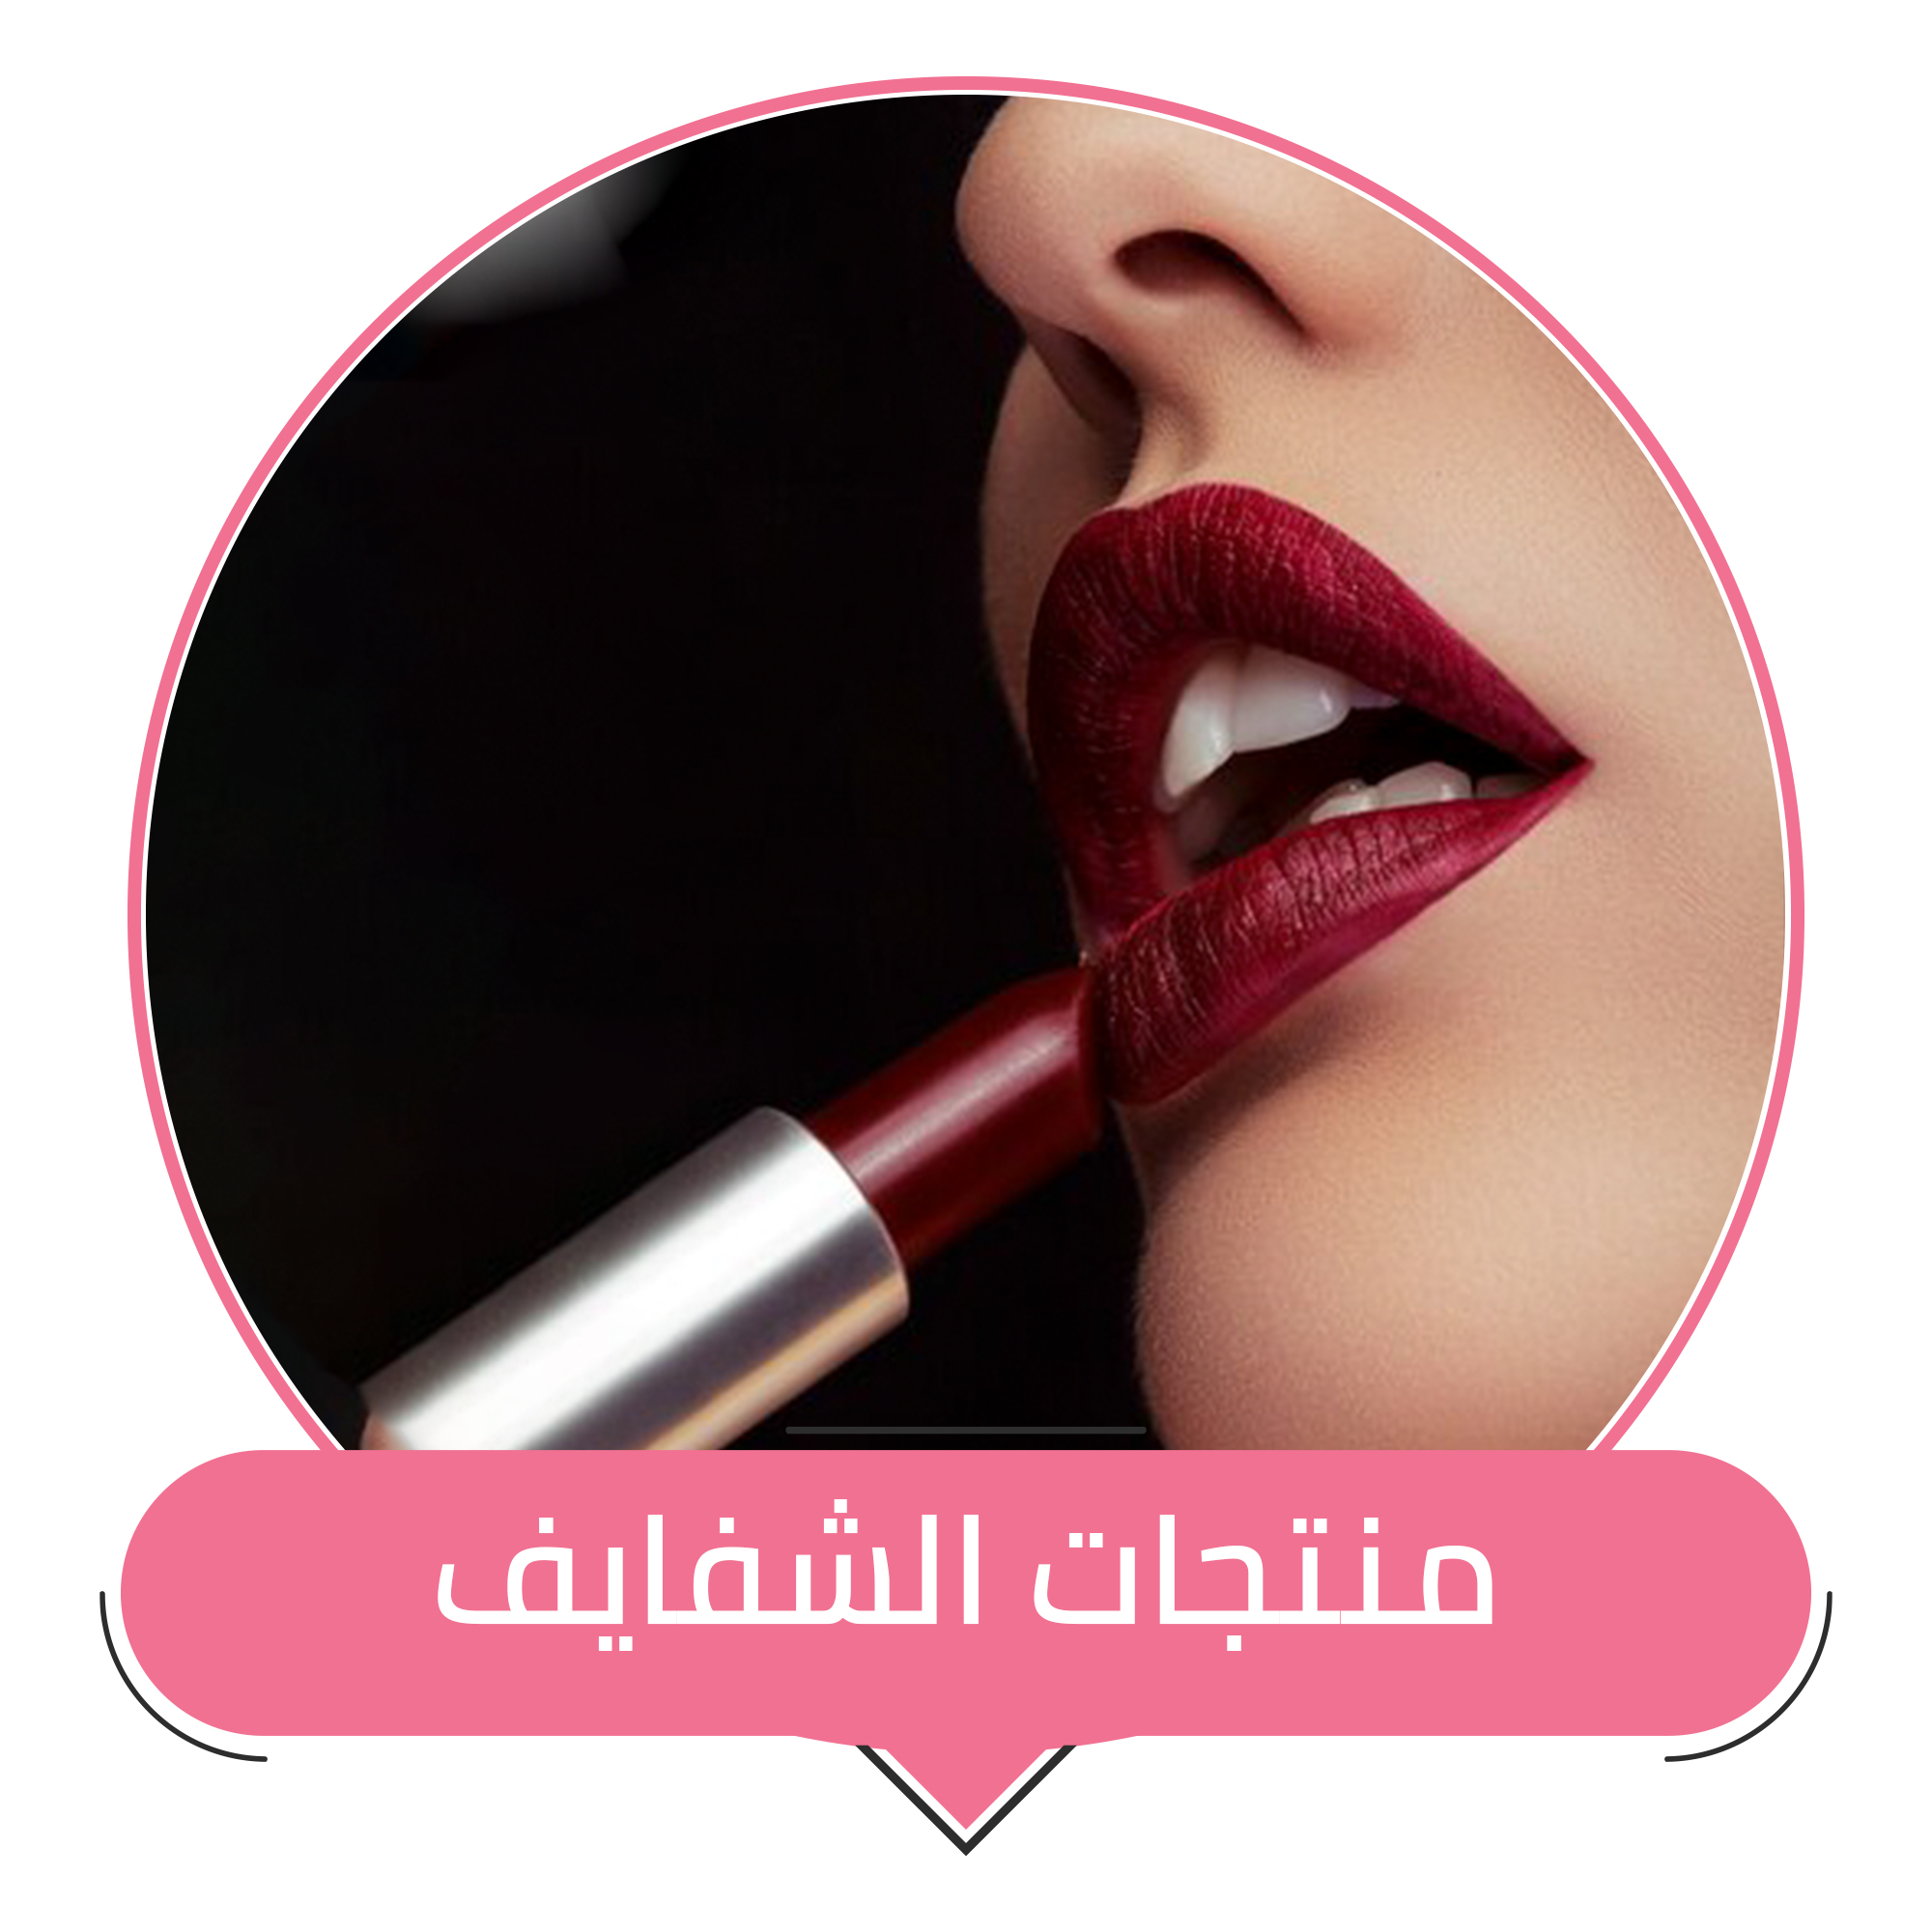 منتجات الشفايف - Lipstick & More